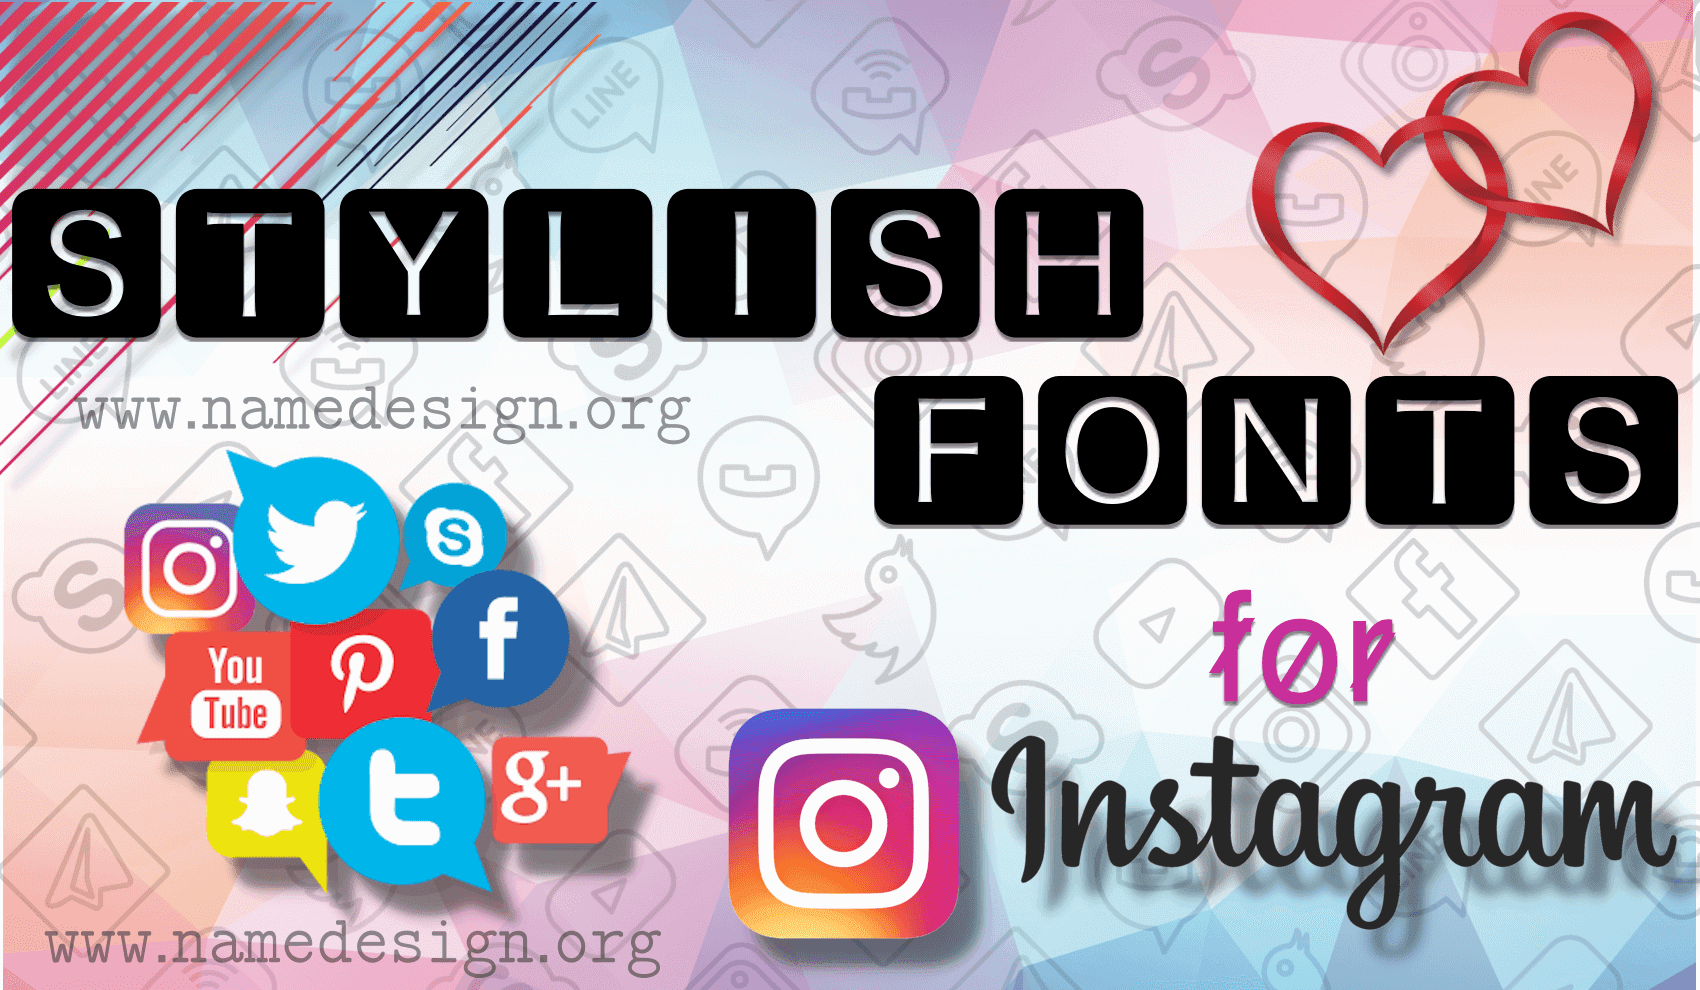 Stylish Fonts for Instagram Post - Name Design